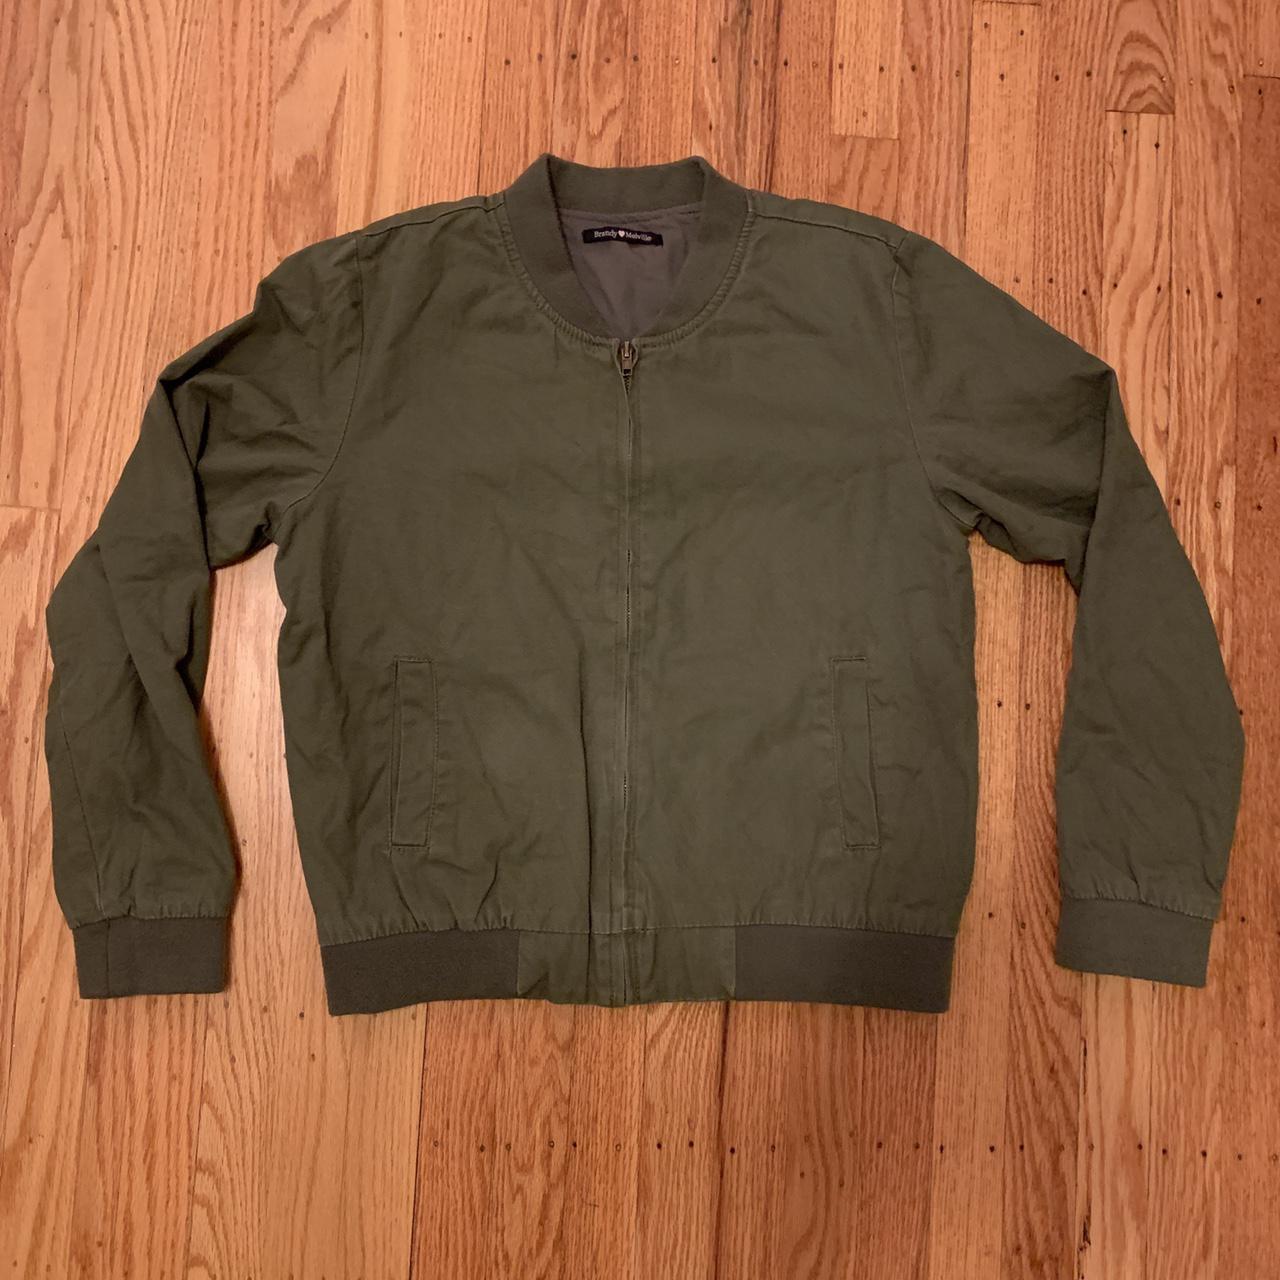 Brandy Melville army green bomber jacket - Depop